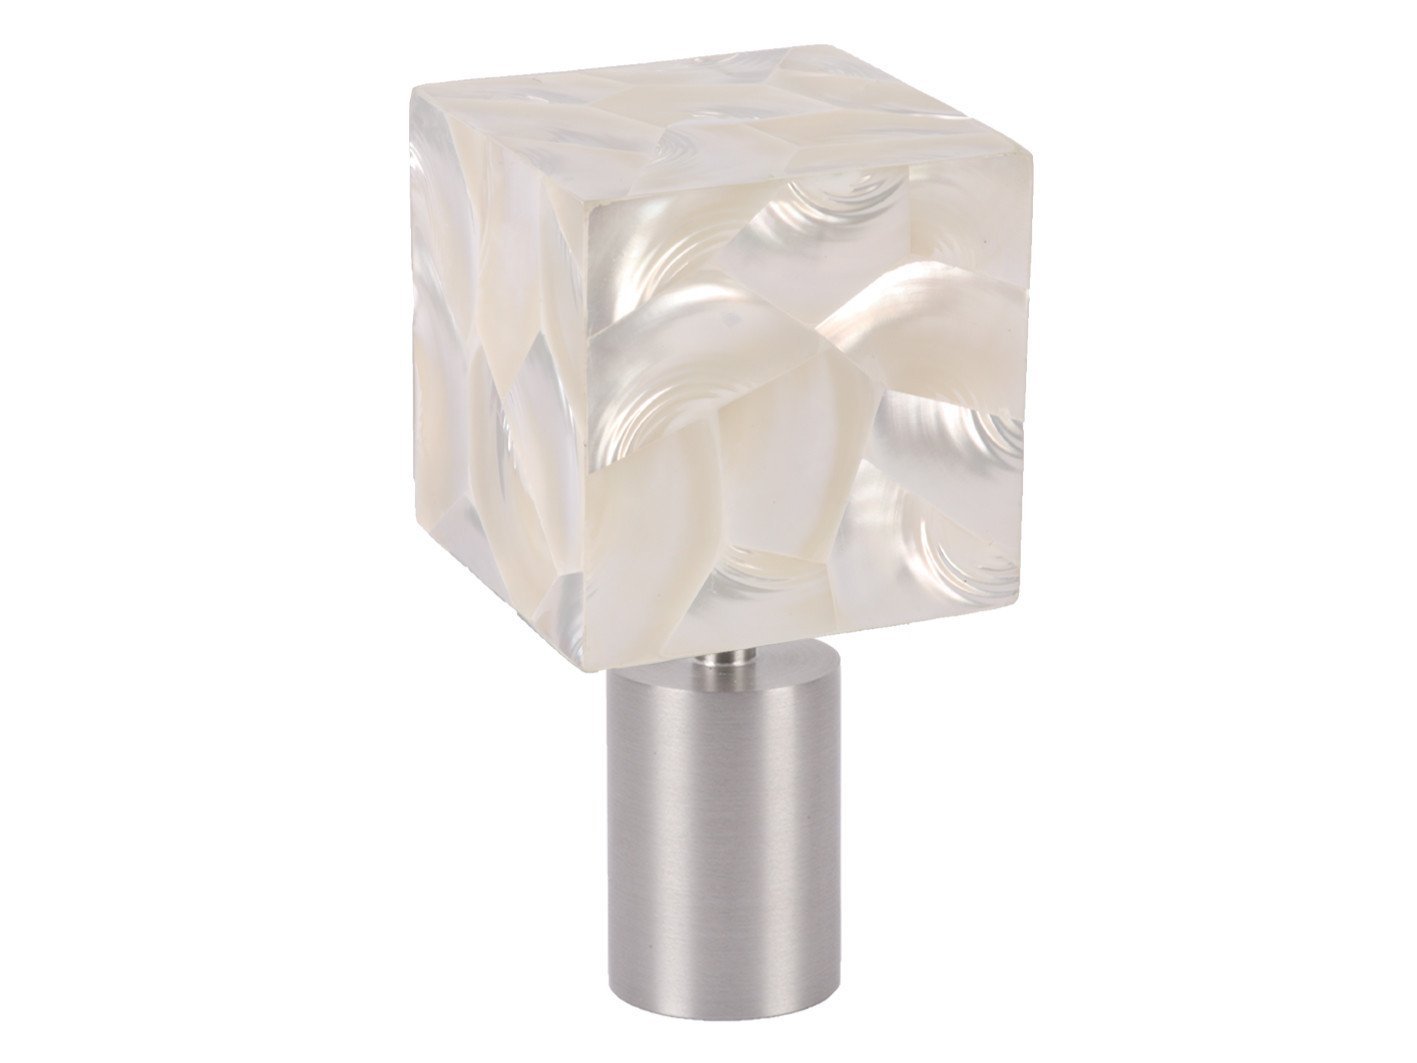 Designer curtain pole finial | Troca Satin white riva cube shell with steel spigot